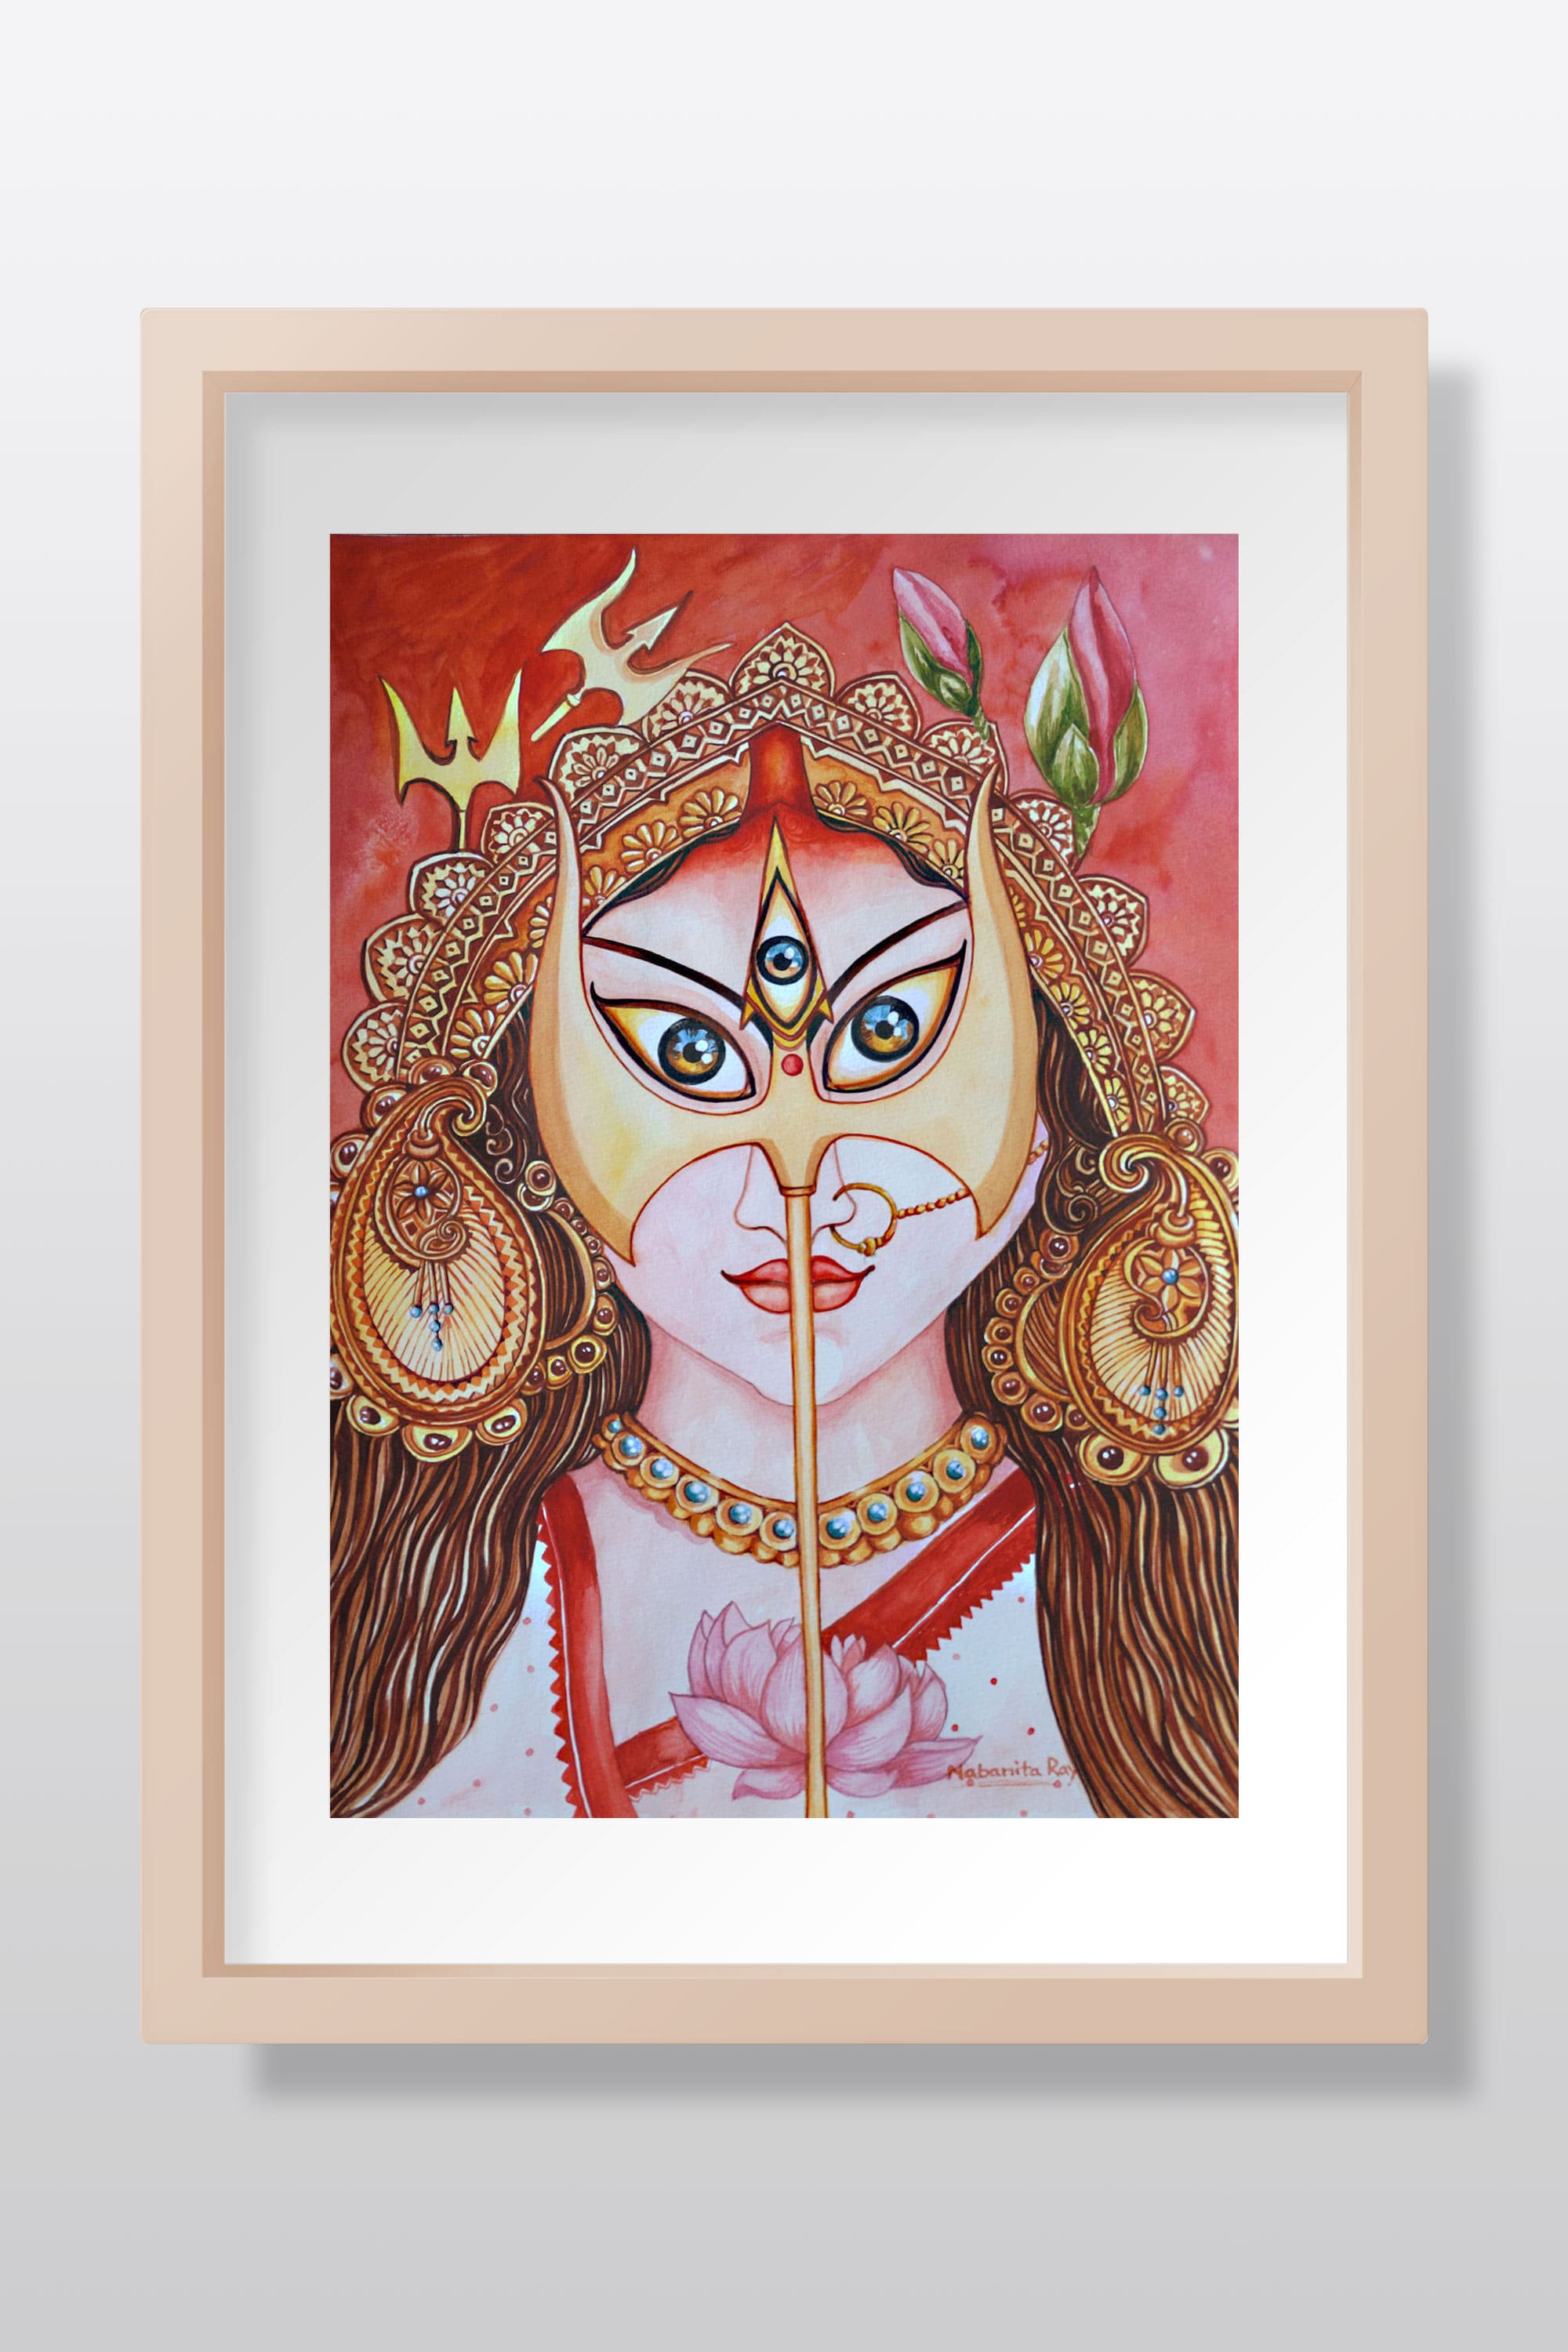 New colour pencil work  Maa Durga  12  Steemit